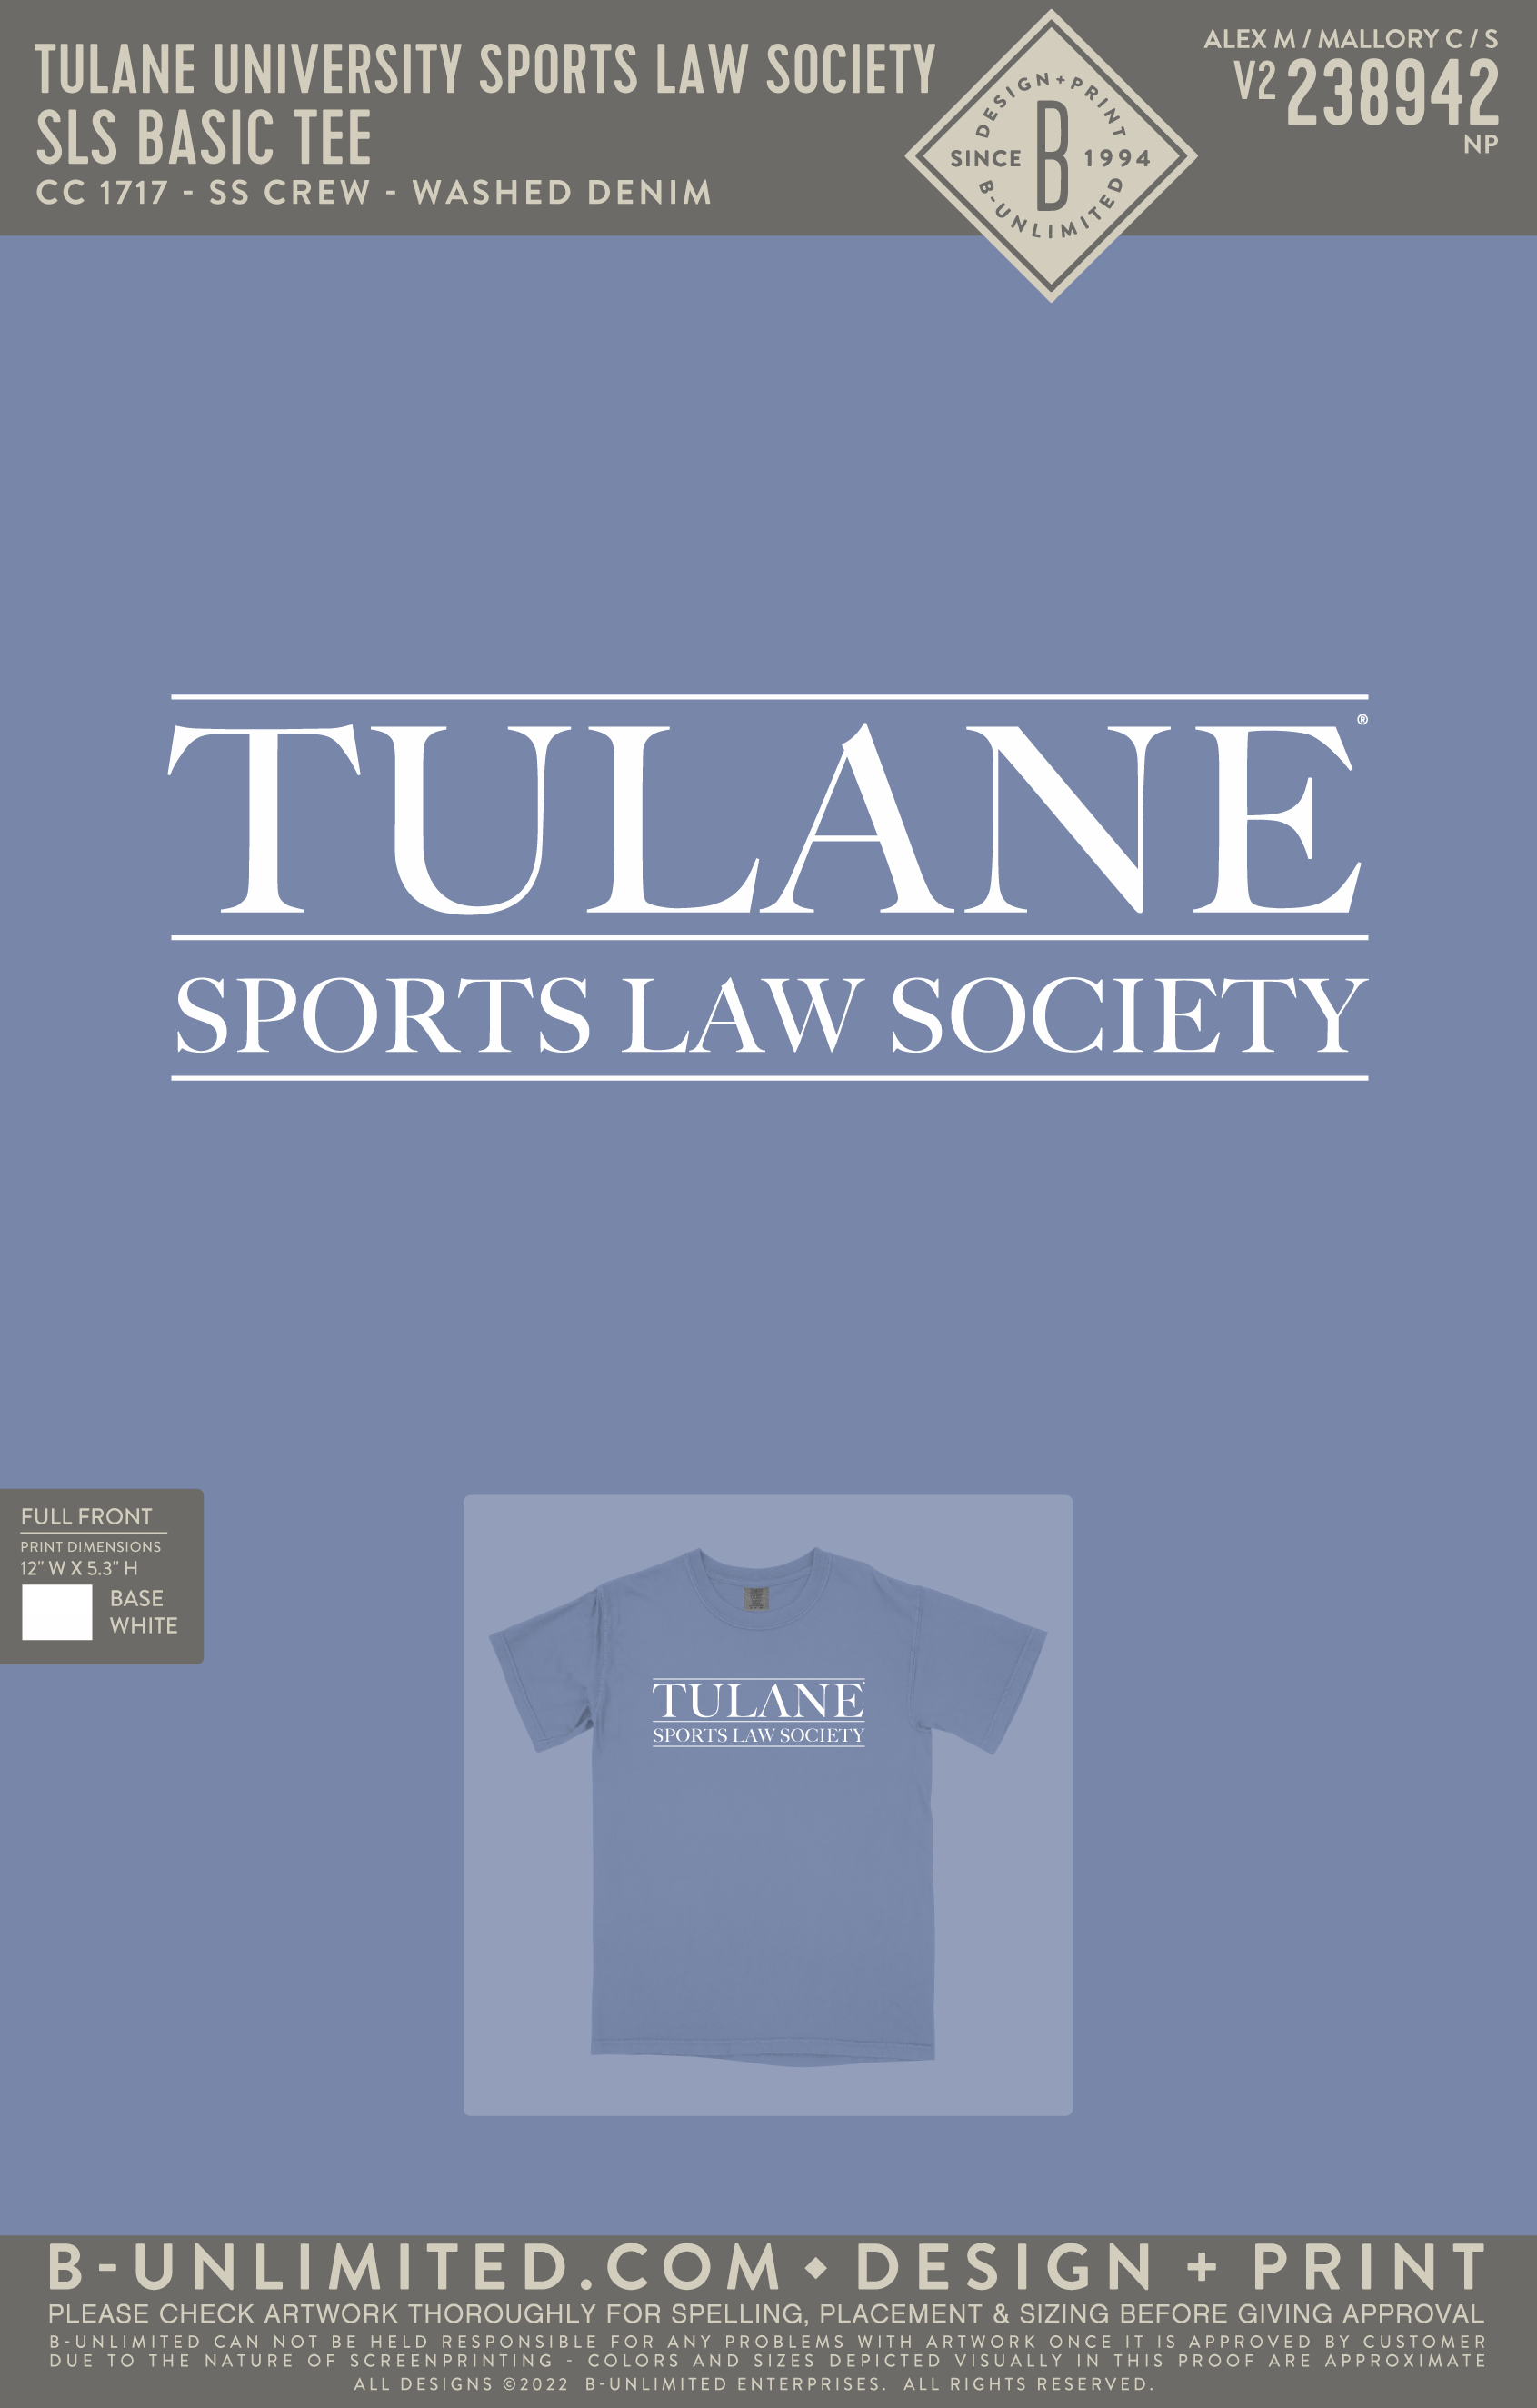 Tulane University Sports Law Society - SLS Basic tee - CC - 1717 - SS Crew - Washed Denim